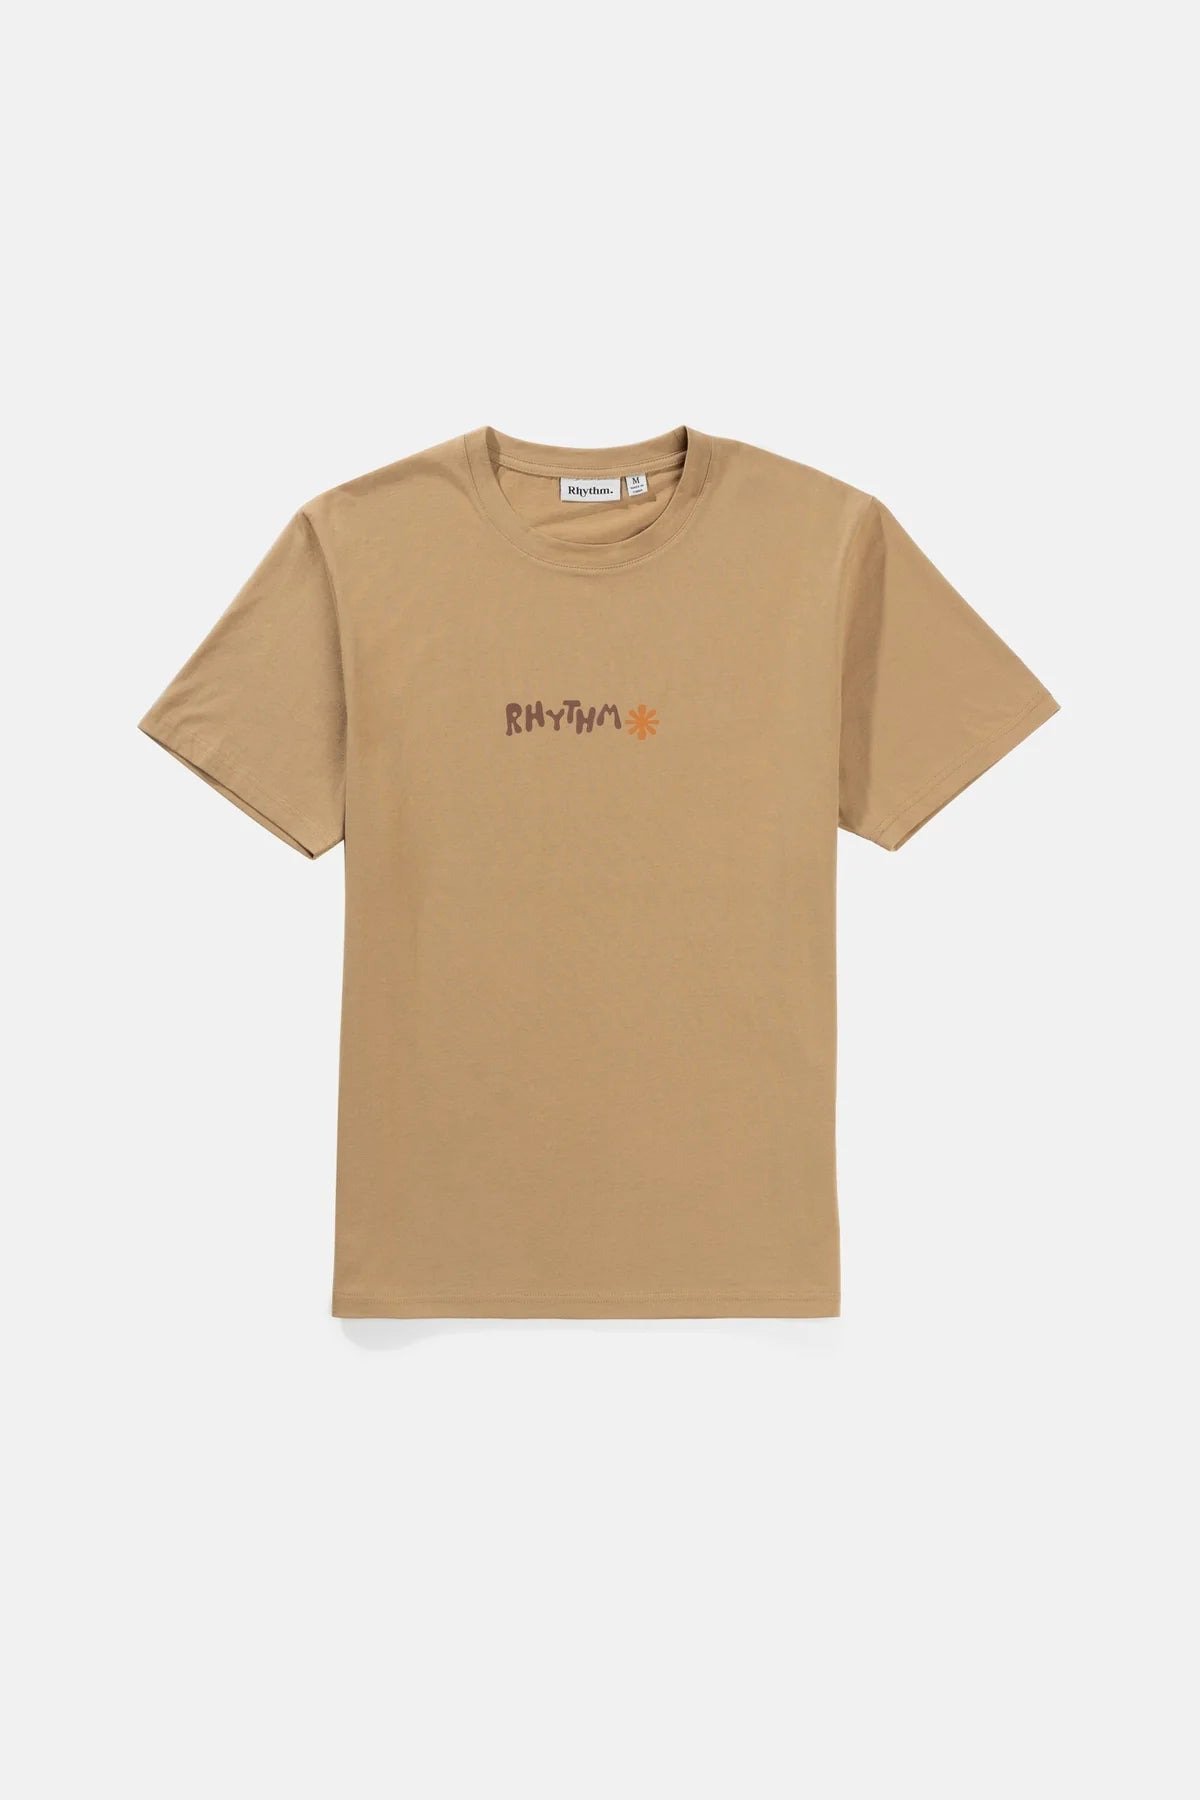 Rhythm Scrawl Ss T Shirt Incense | Men Collective 